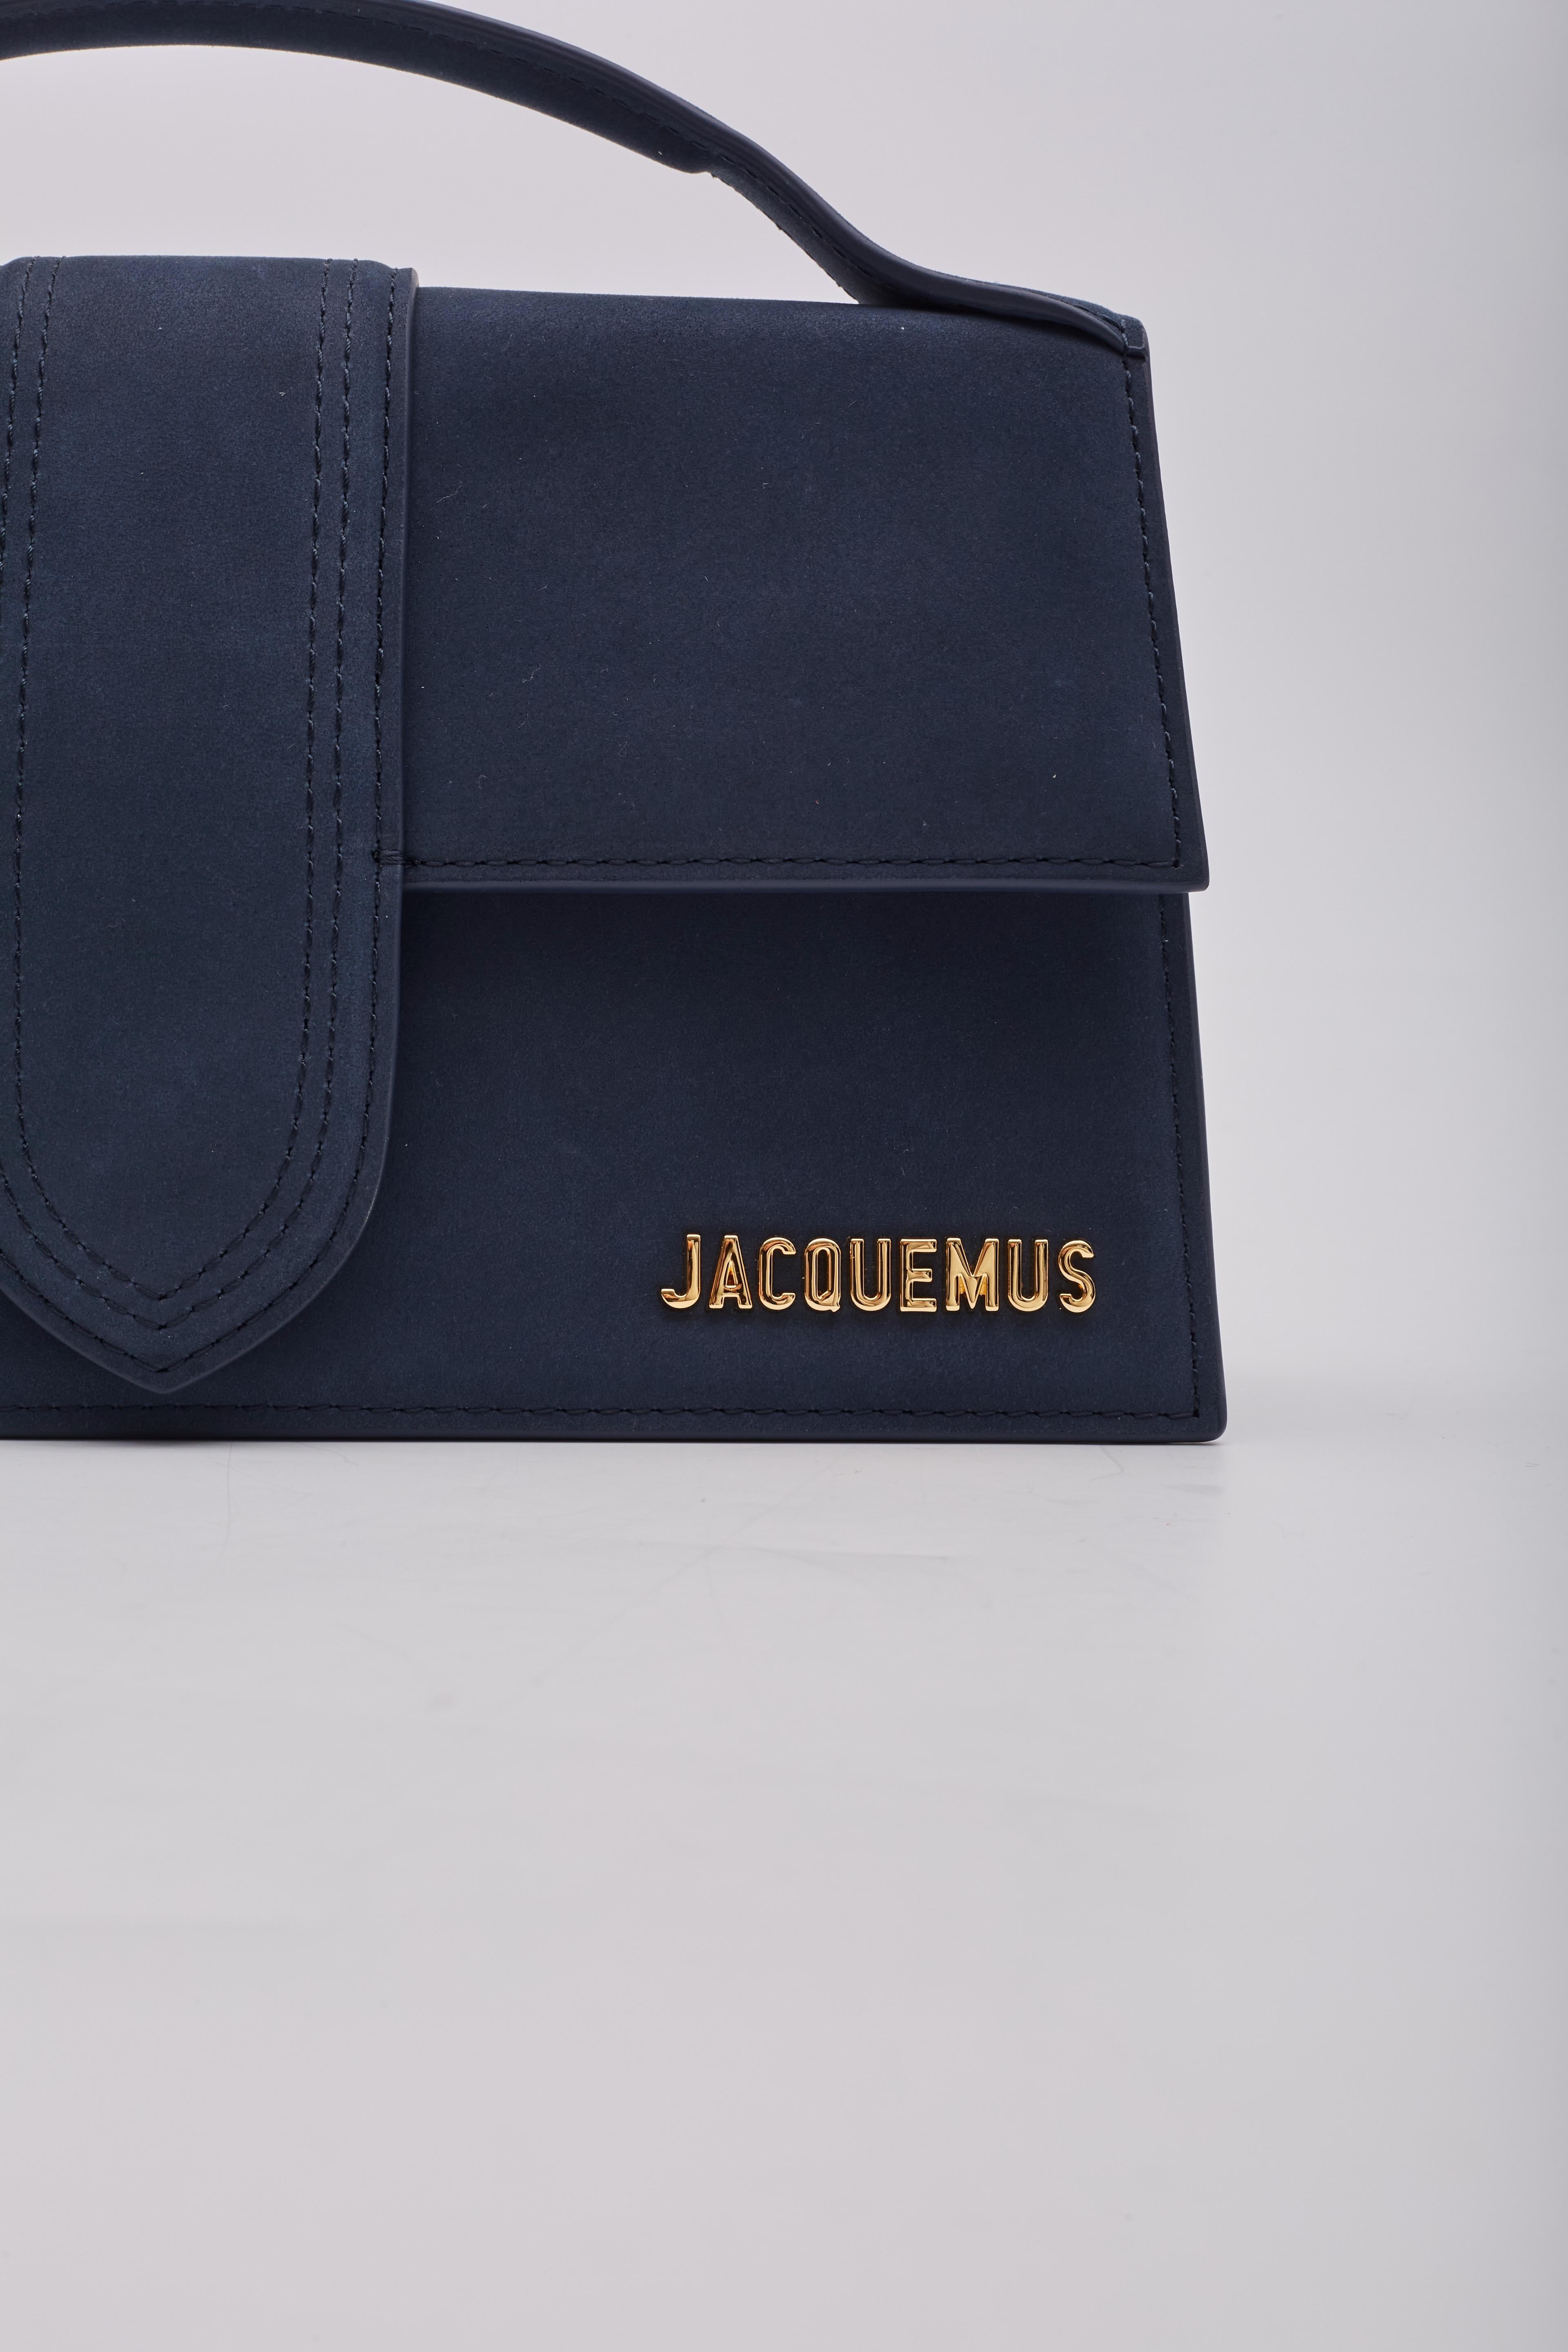 Jacquemus Le Grand Bambino Dark Navy Leather Shoulder Bag 4